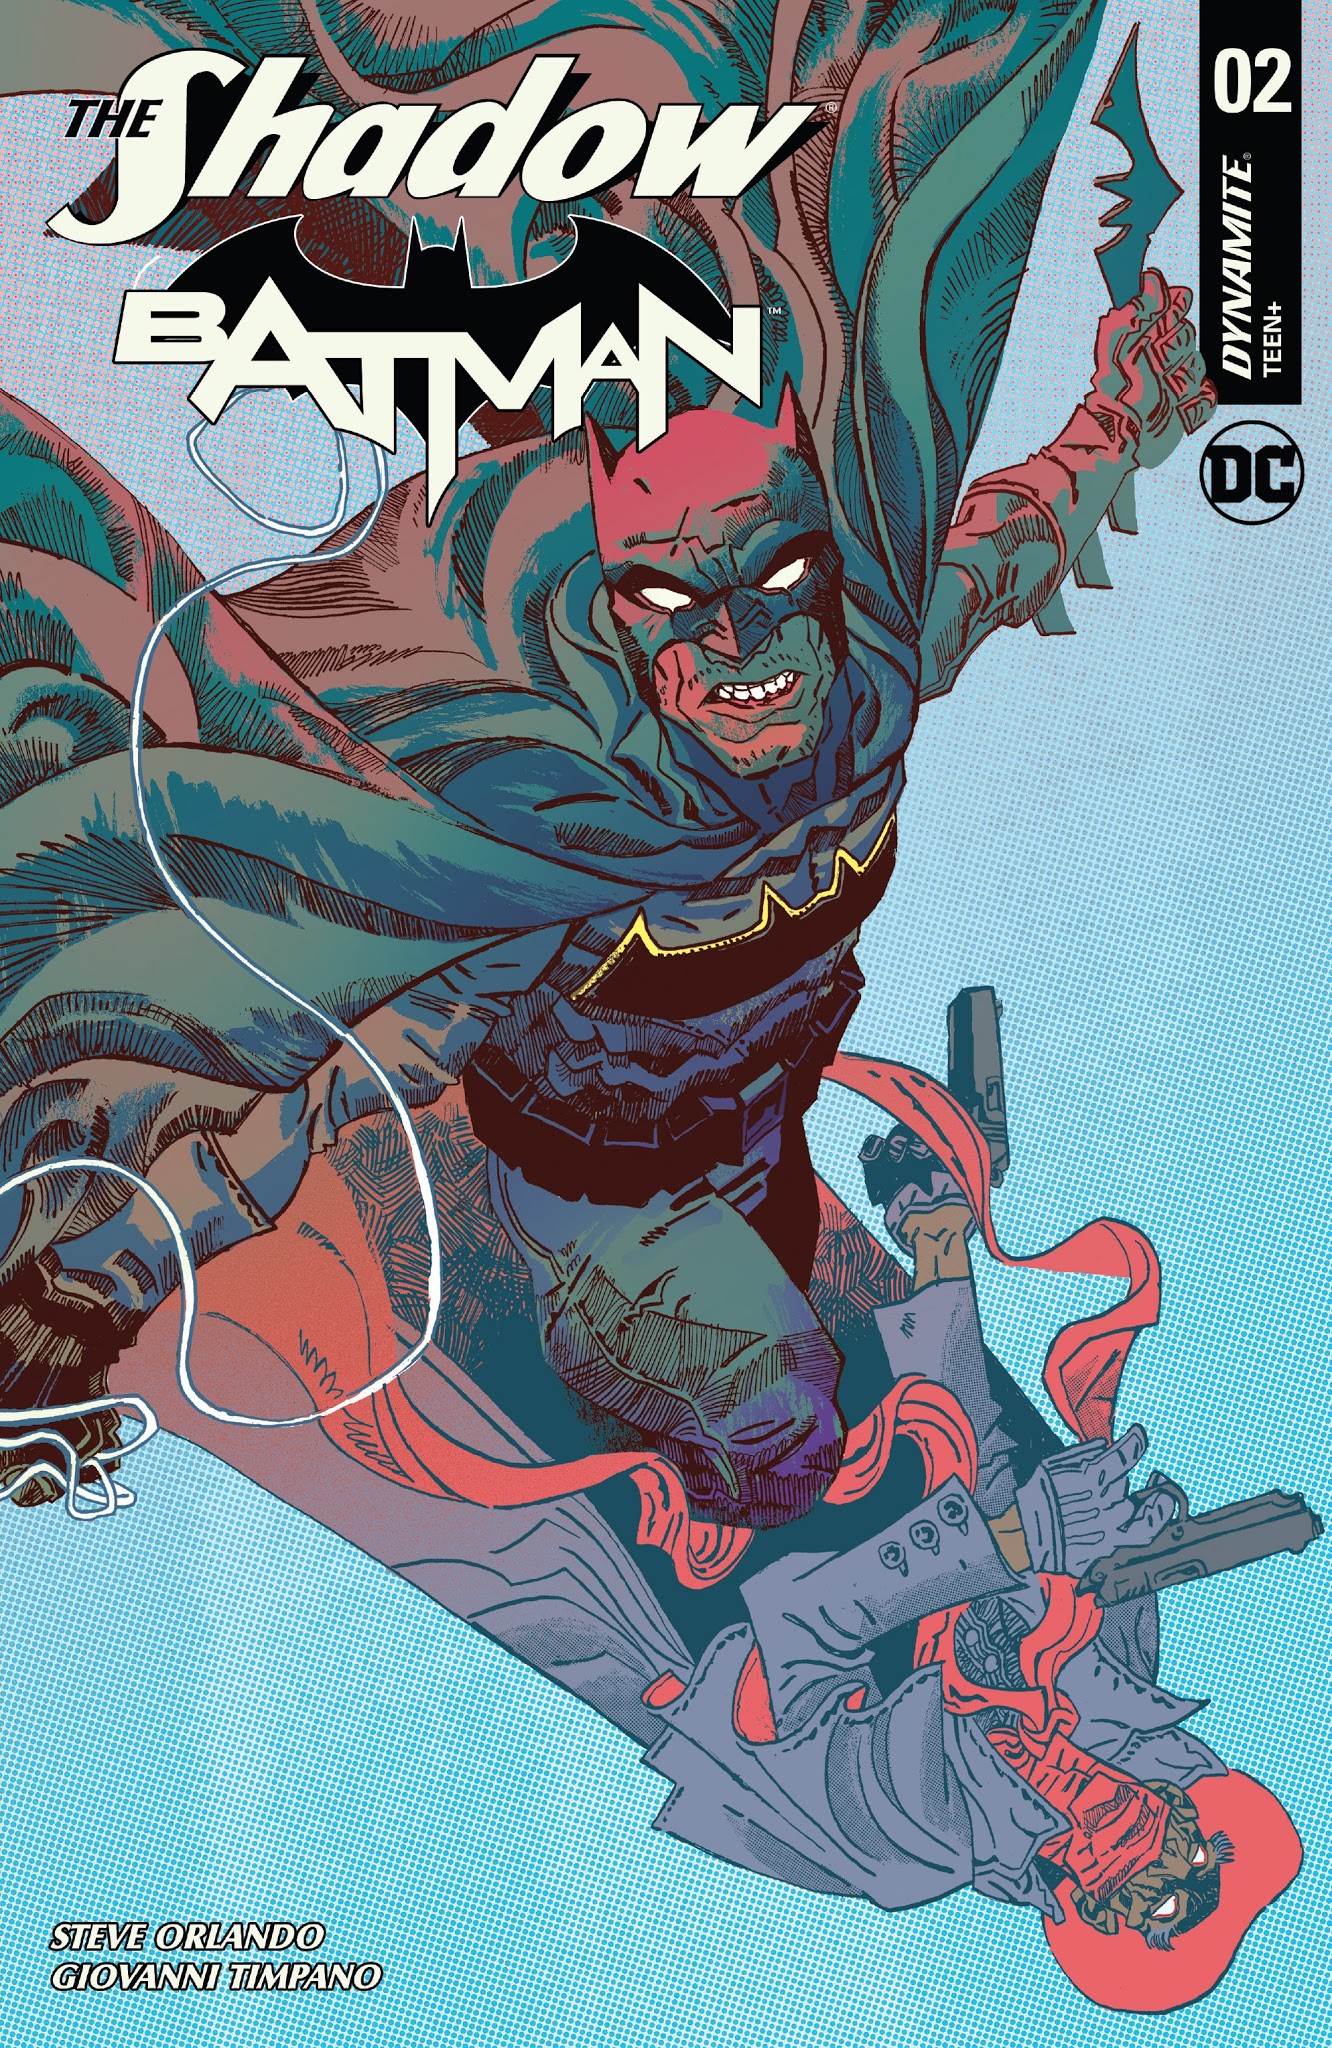 Read online The Shadow/Batman comic -  Issue #2 - 3